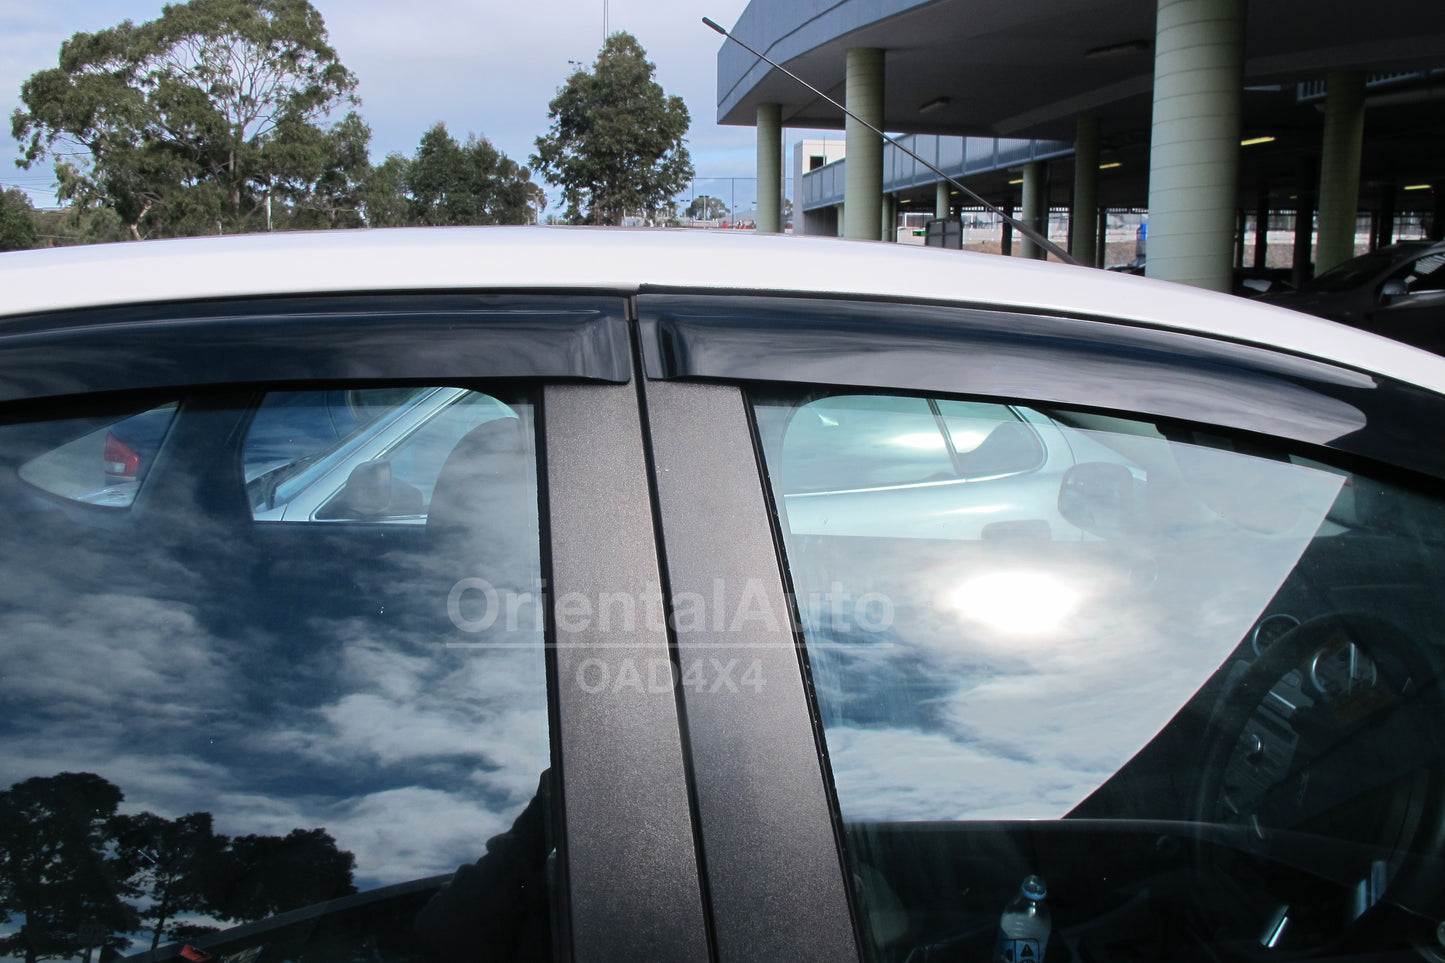 Premium Weathershields Weather Shields Window Visor For Ford Focus 2005-2011